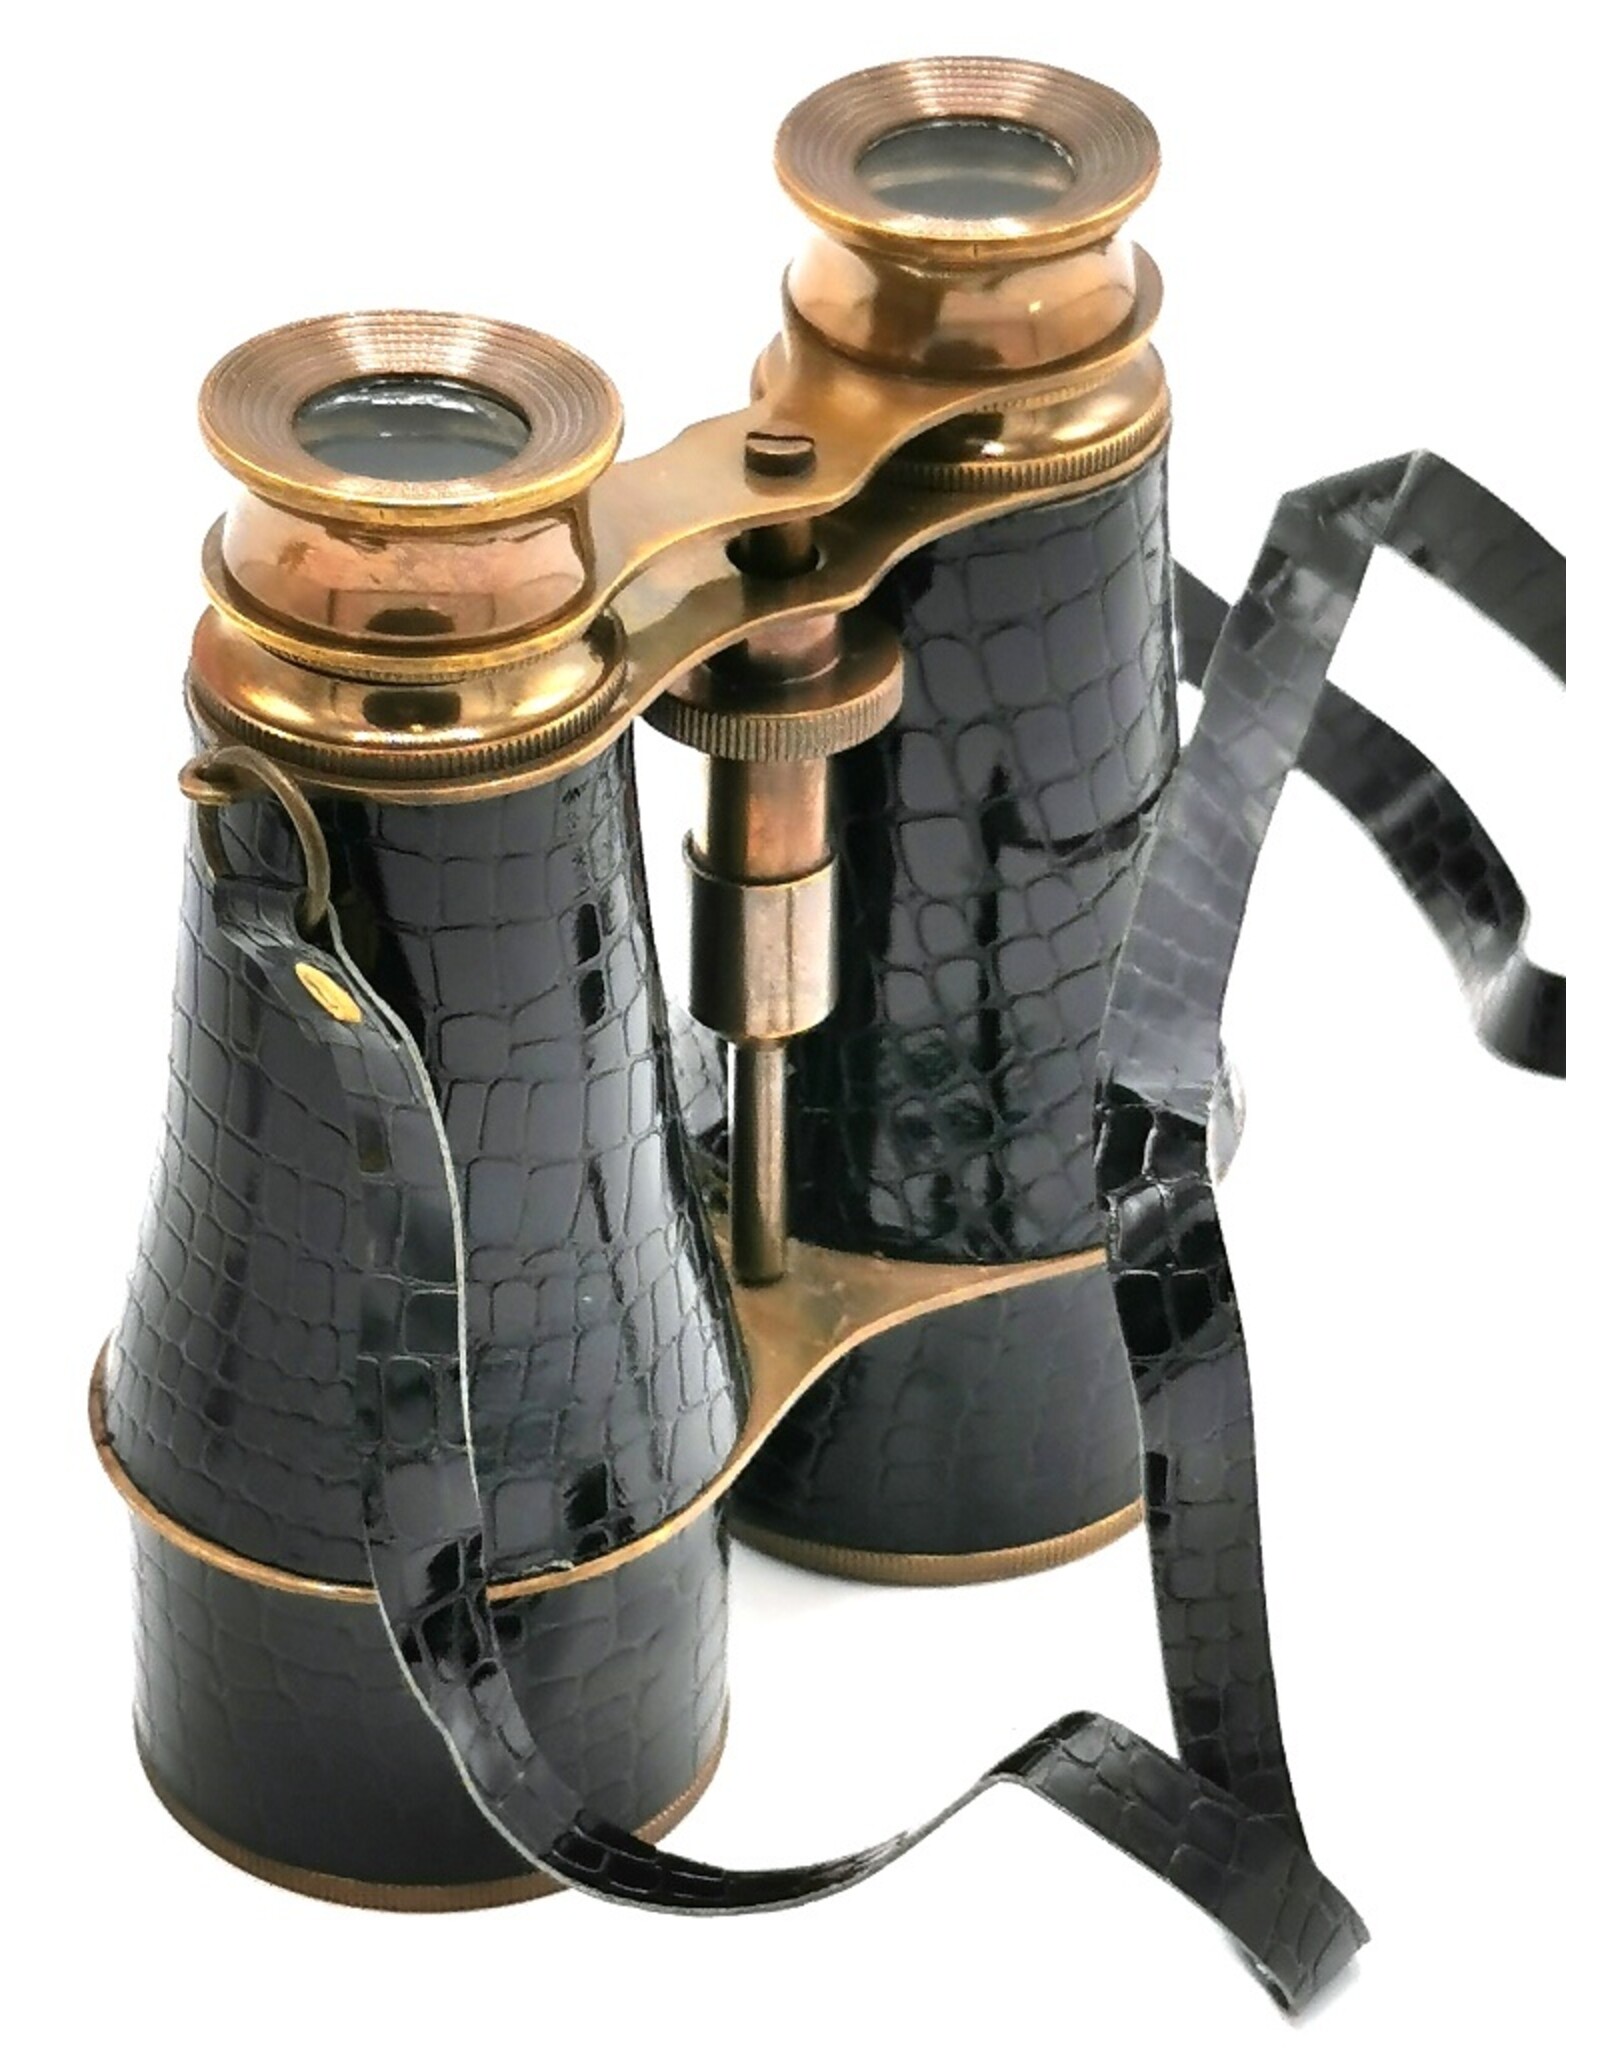 AWG Giftware & Lifestyle - Field Binoculars Brass Antique look